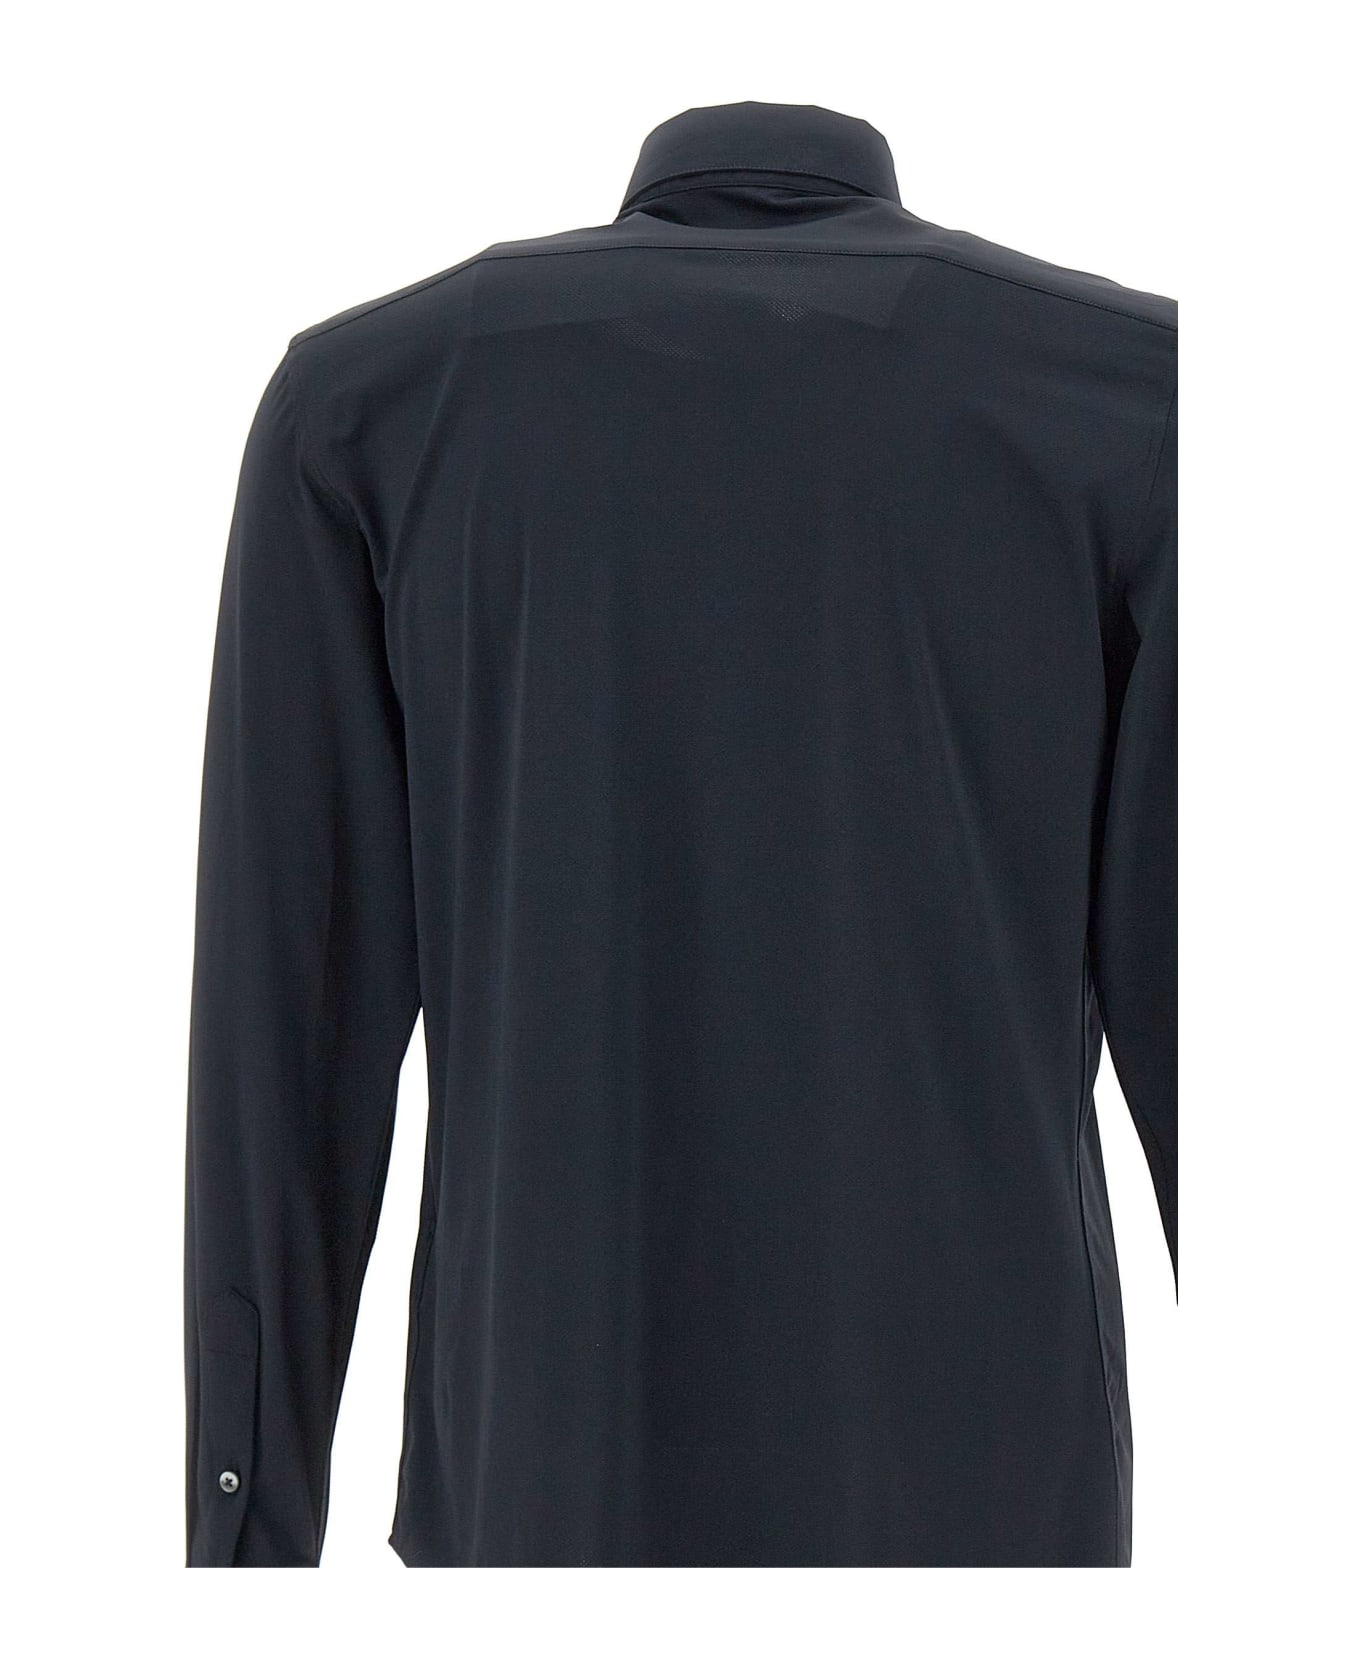 RRD - Roberto Ricci Design 'oxford' Shirt - Blue Black